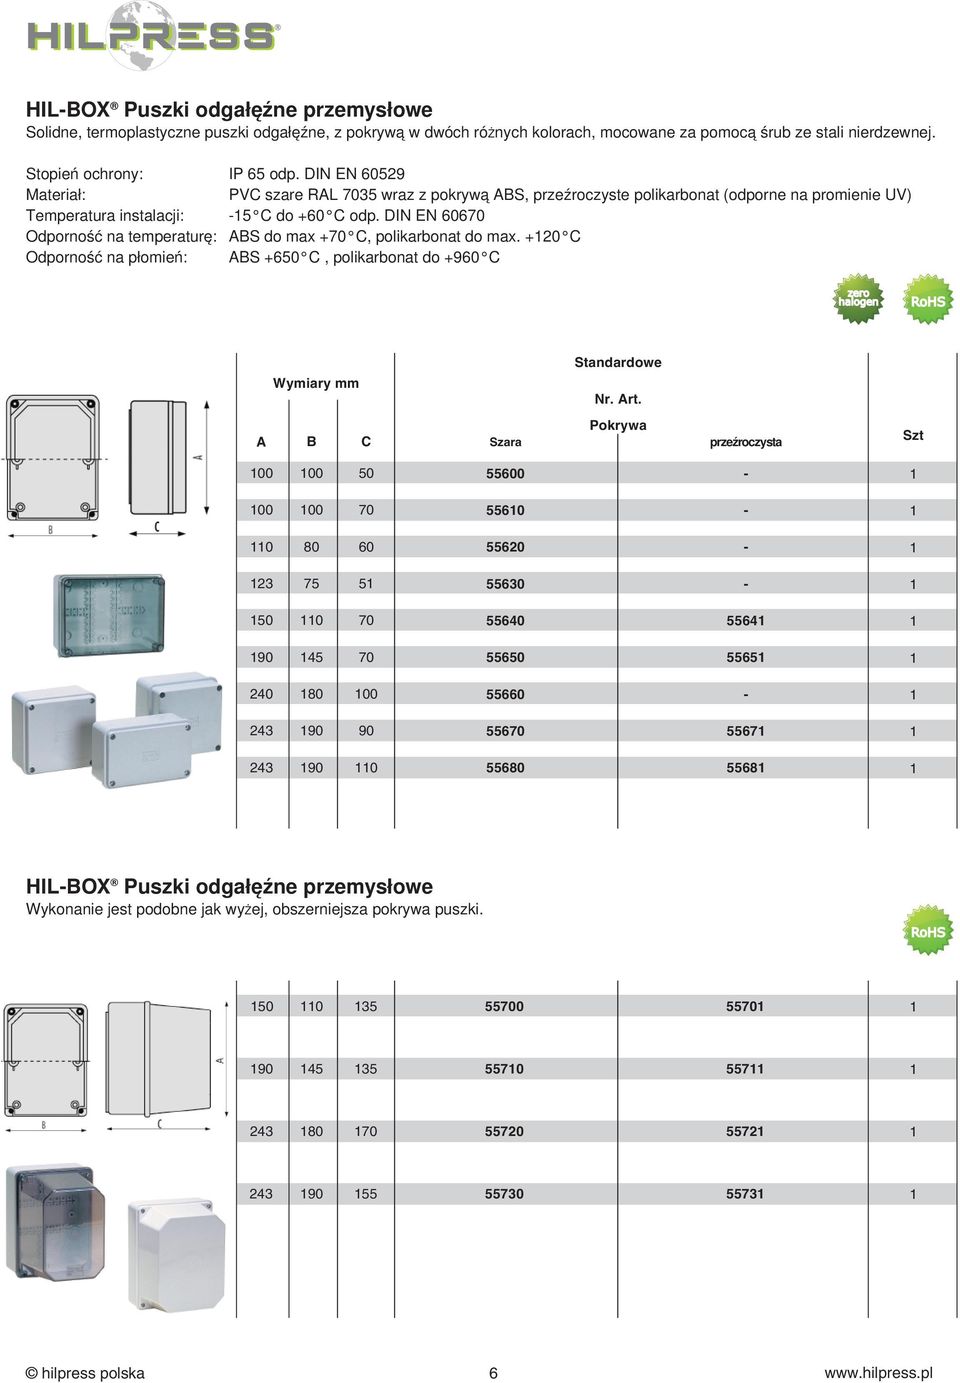 DIN EN 606 Odporność na temperaturę: ABS do max + C, polikarbonat do max.